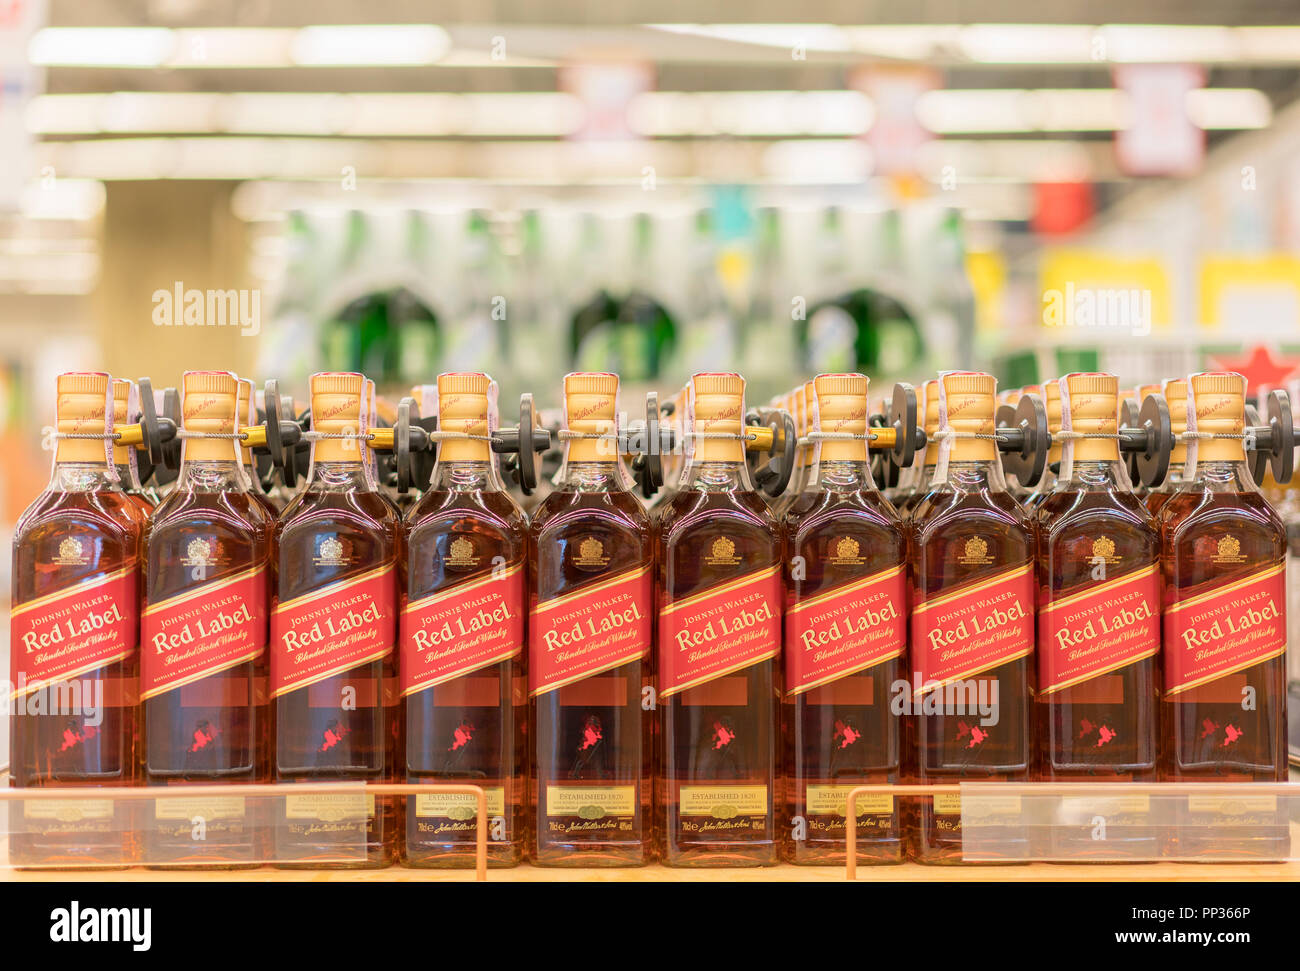 Alcoholic Drinks On Shelves Supermarket Stock Photos